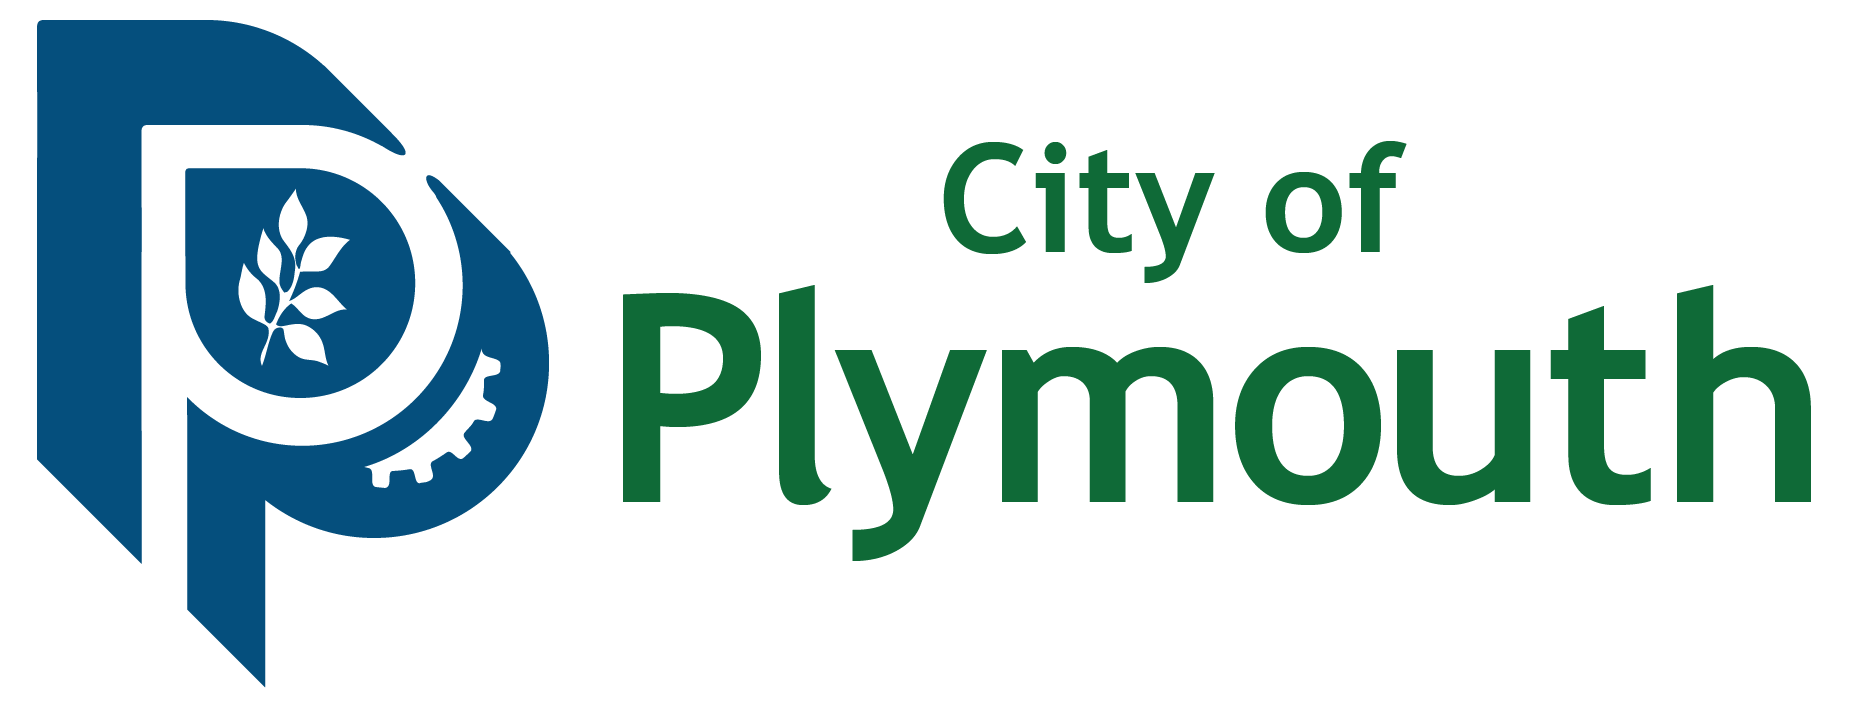 Plymouth city logo